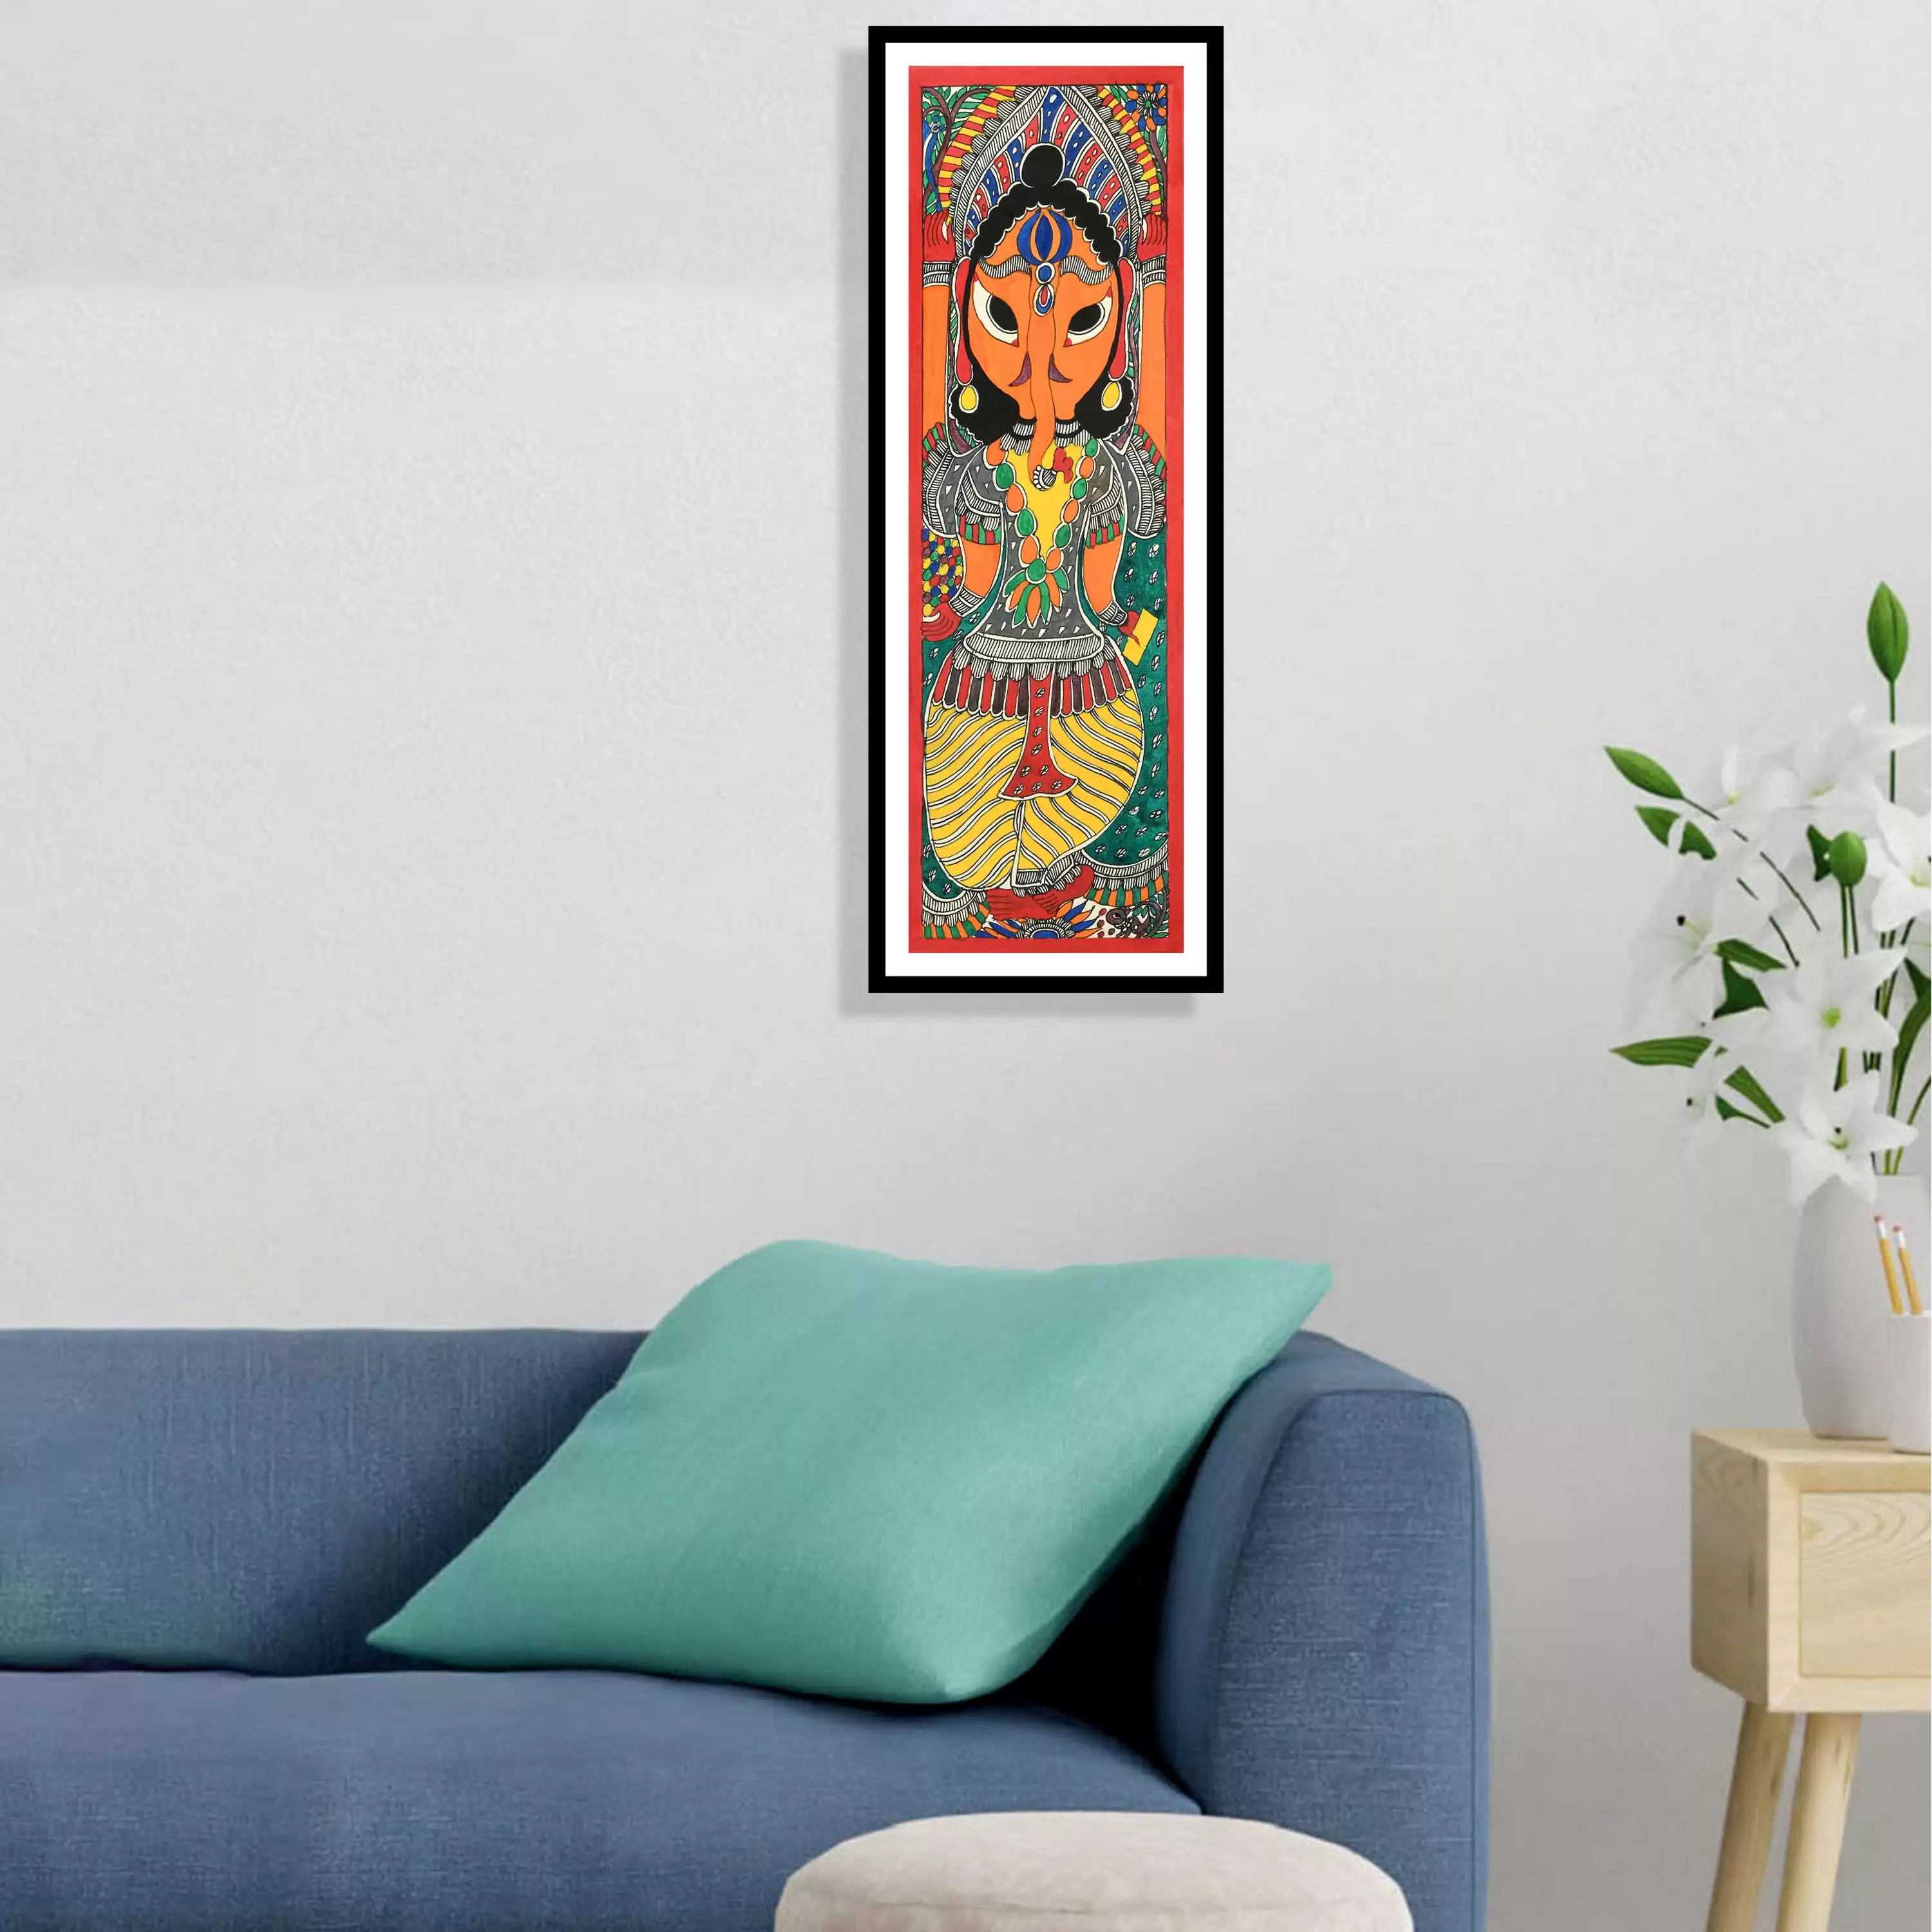 Madhubani Art Painting of Ganesha for Livingroom, Bedroom, Home & Office Wall Art Decor